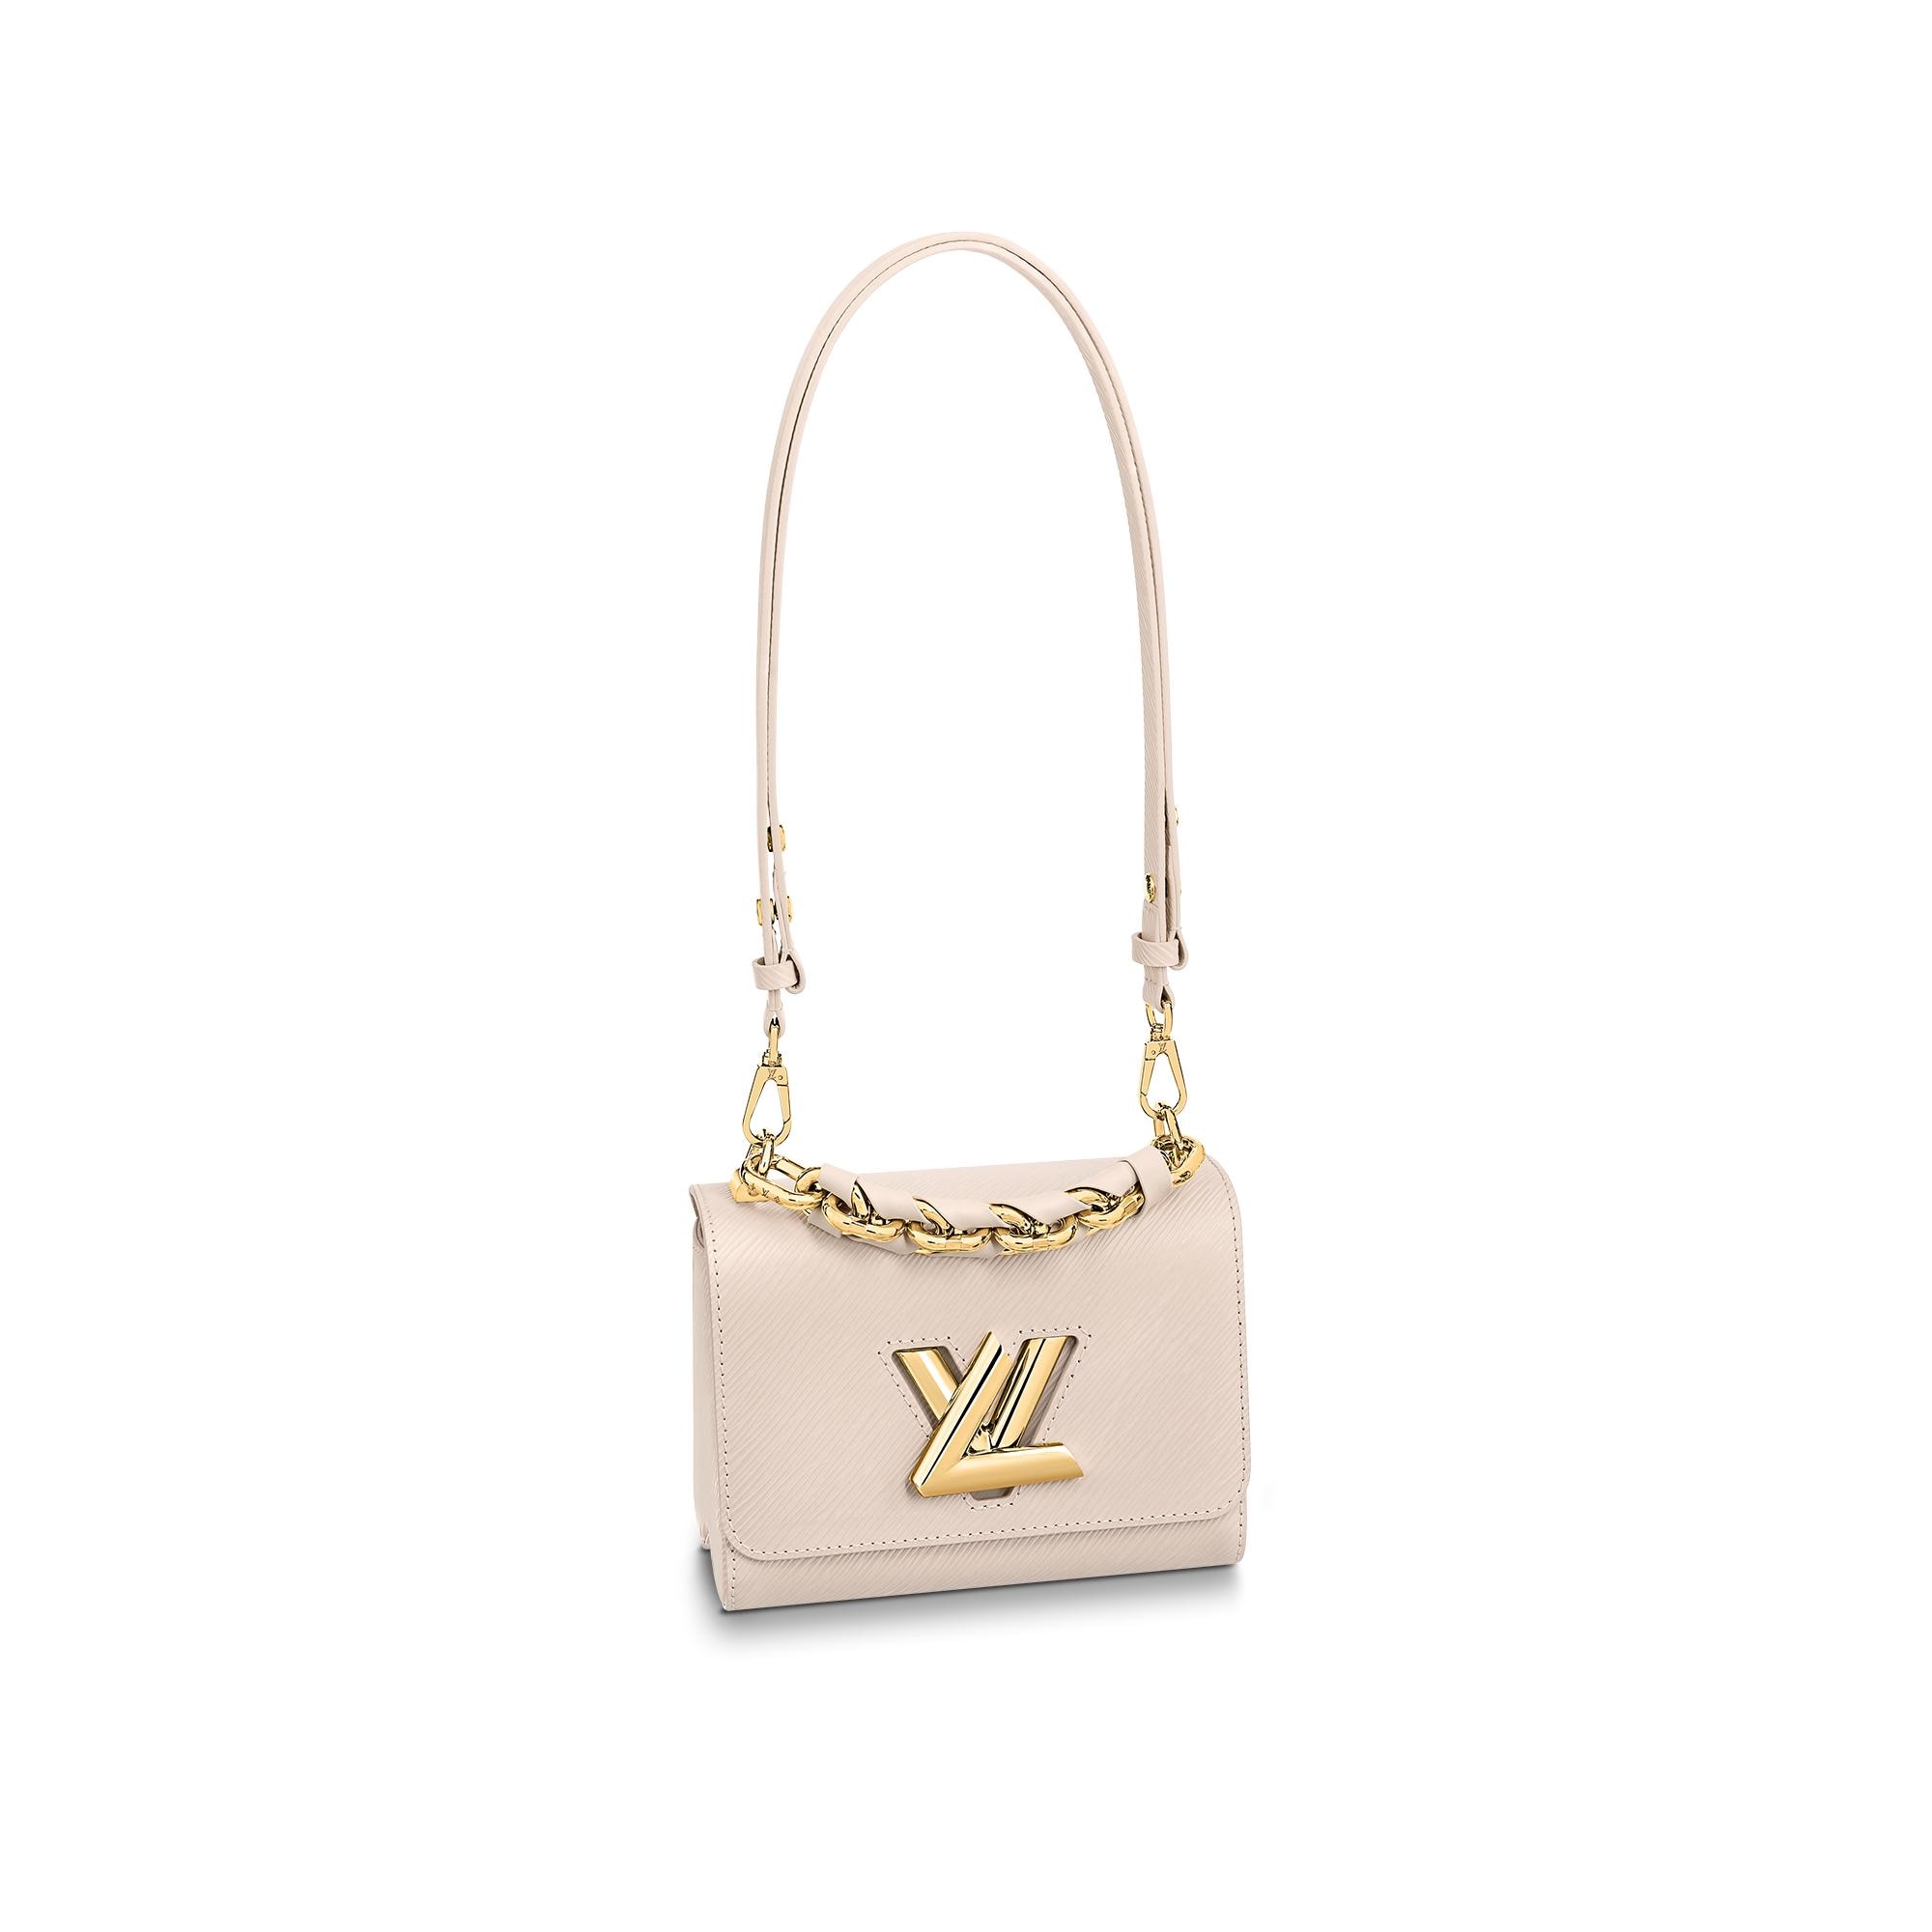 Louis Vuitton Twist PM vs MM (I love twist bag) #LVTWIST #louisvuitton # twist #bags #chooseone # 